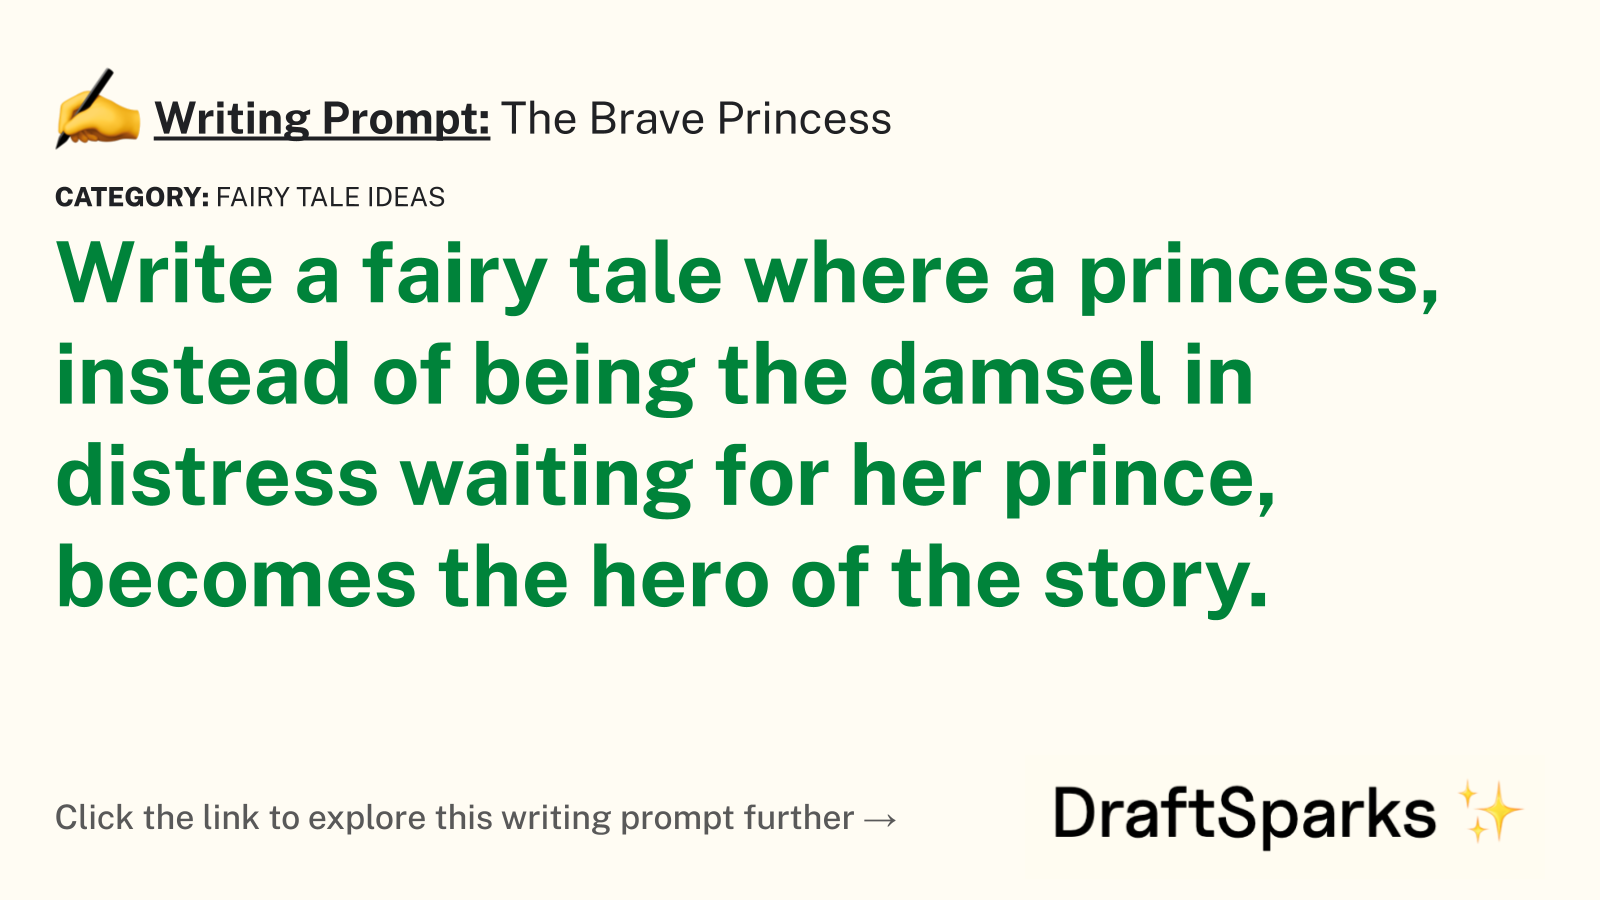 The Brave Princess